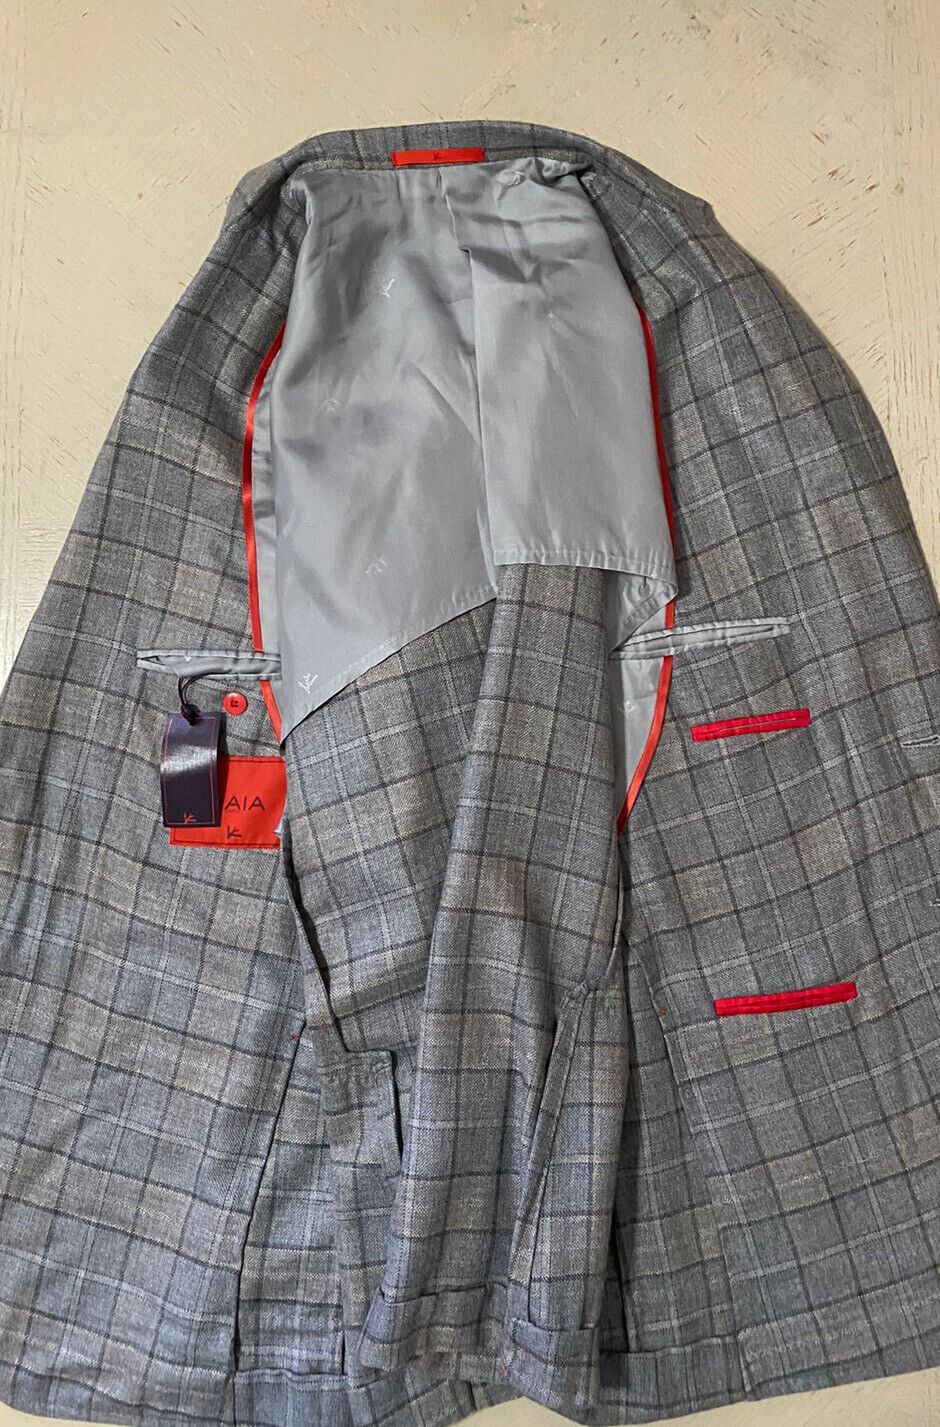 NWT $4790 Isaia Men Cashmere Sport Coat Jacket Blazer LT Gray 44R US Italy